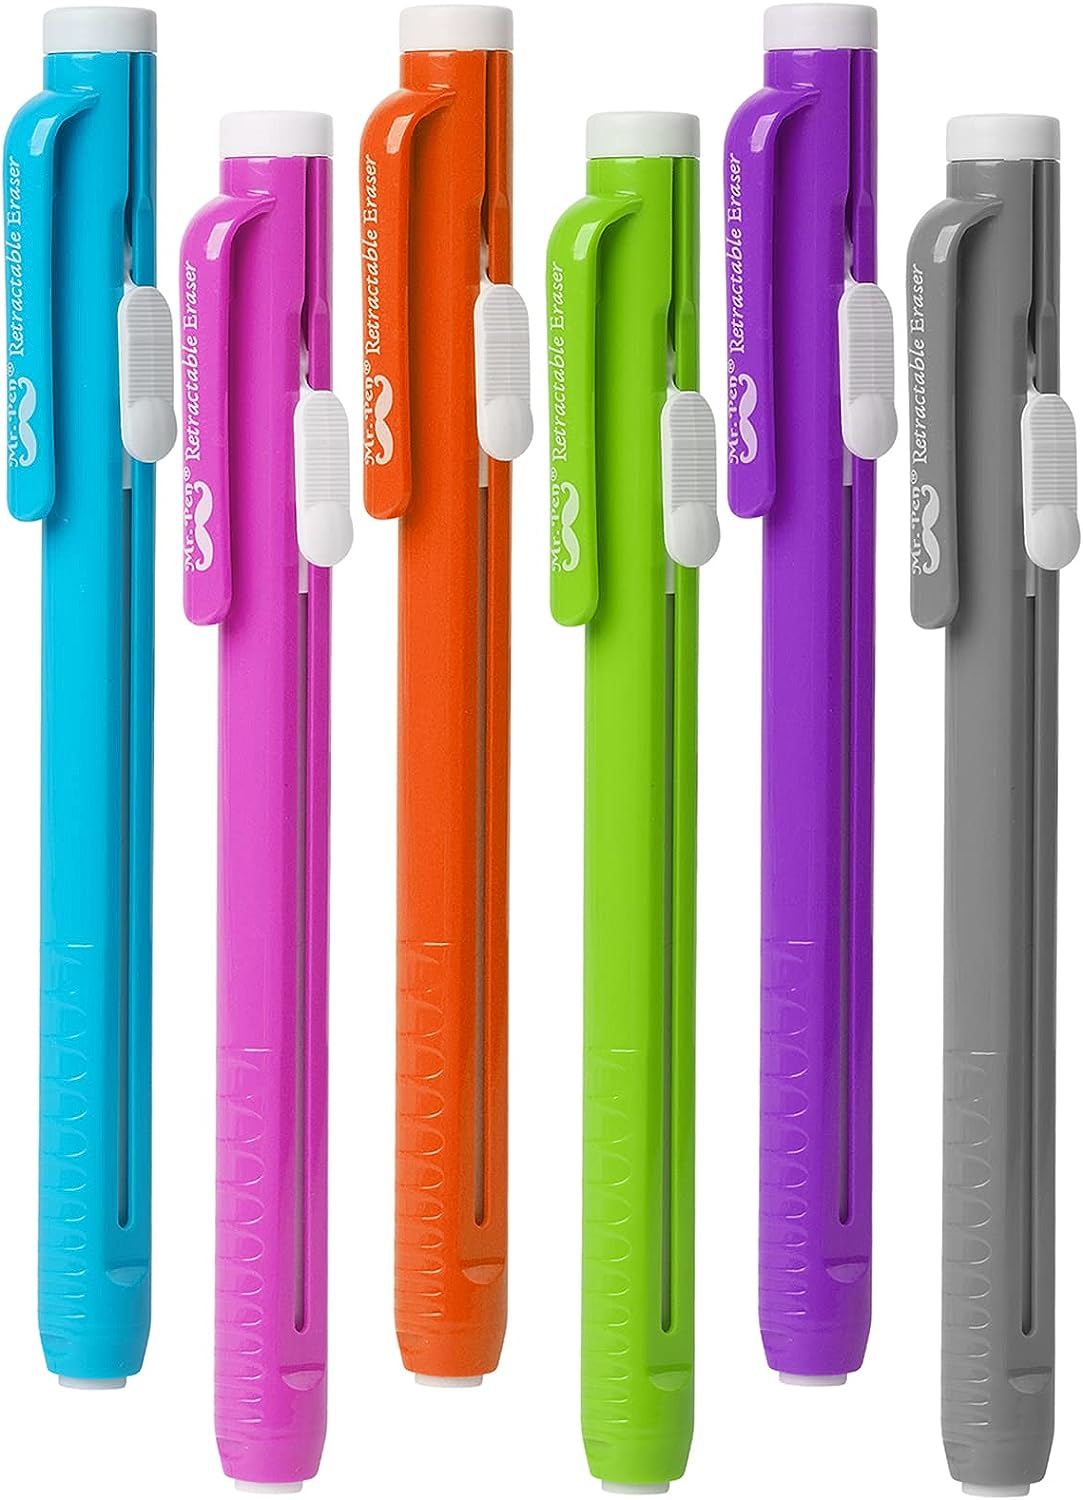 Mr. Pen Retractable Mechanical Eraser Pen, Pack of 6, [...]